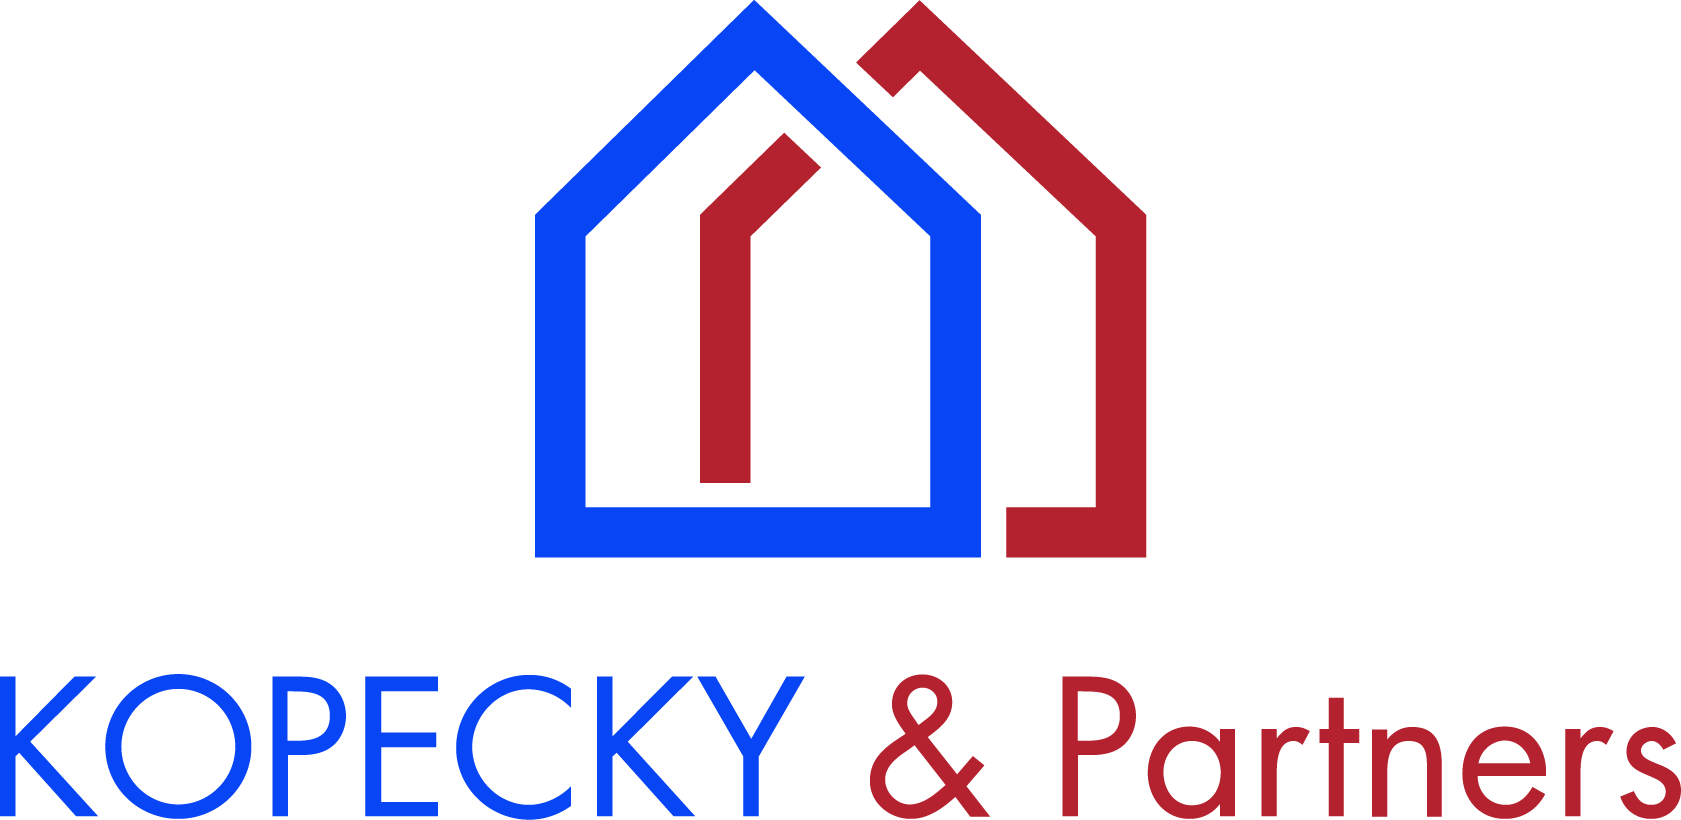 Logo Kopecky & Partners